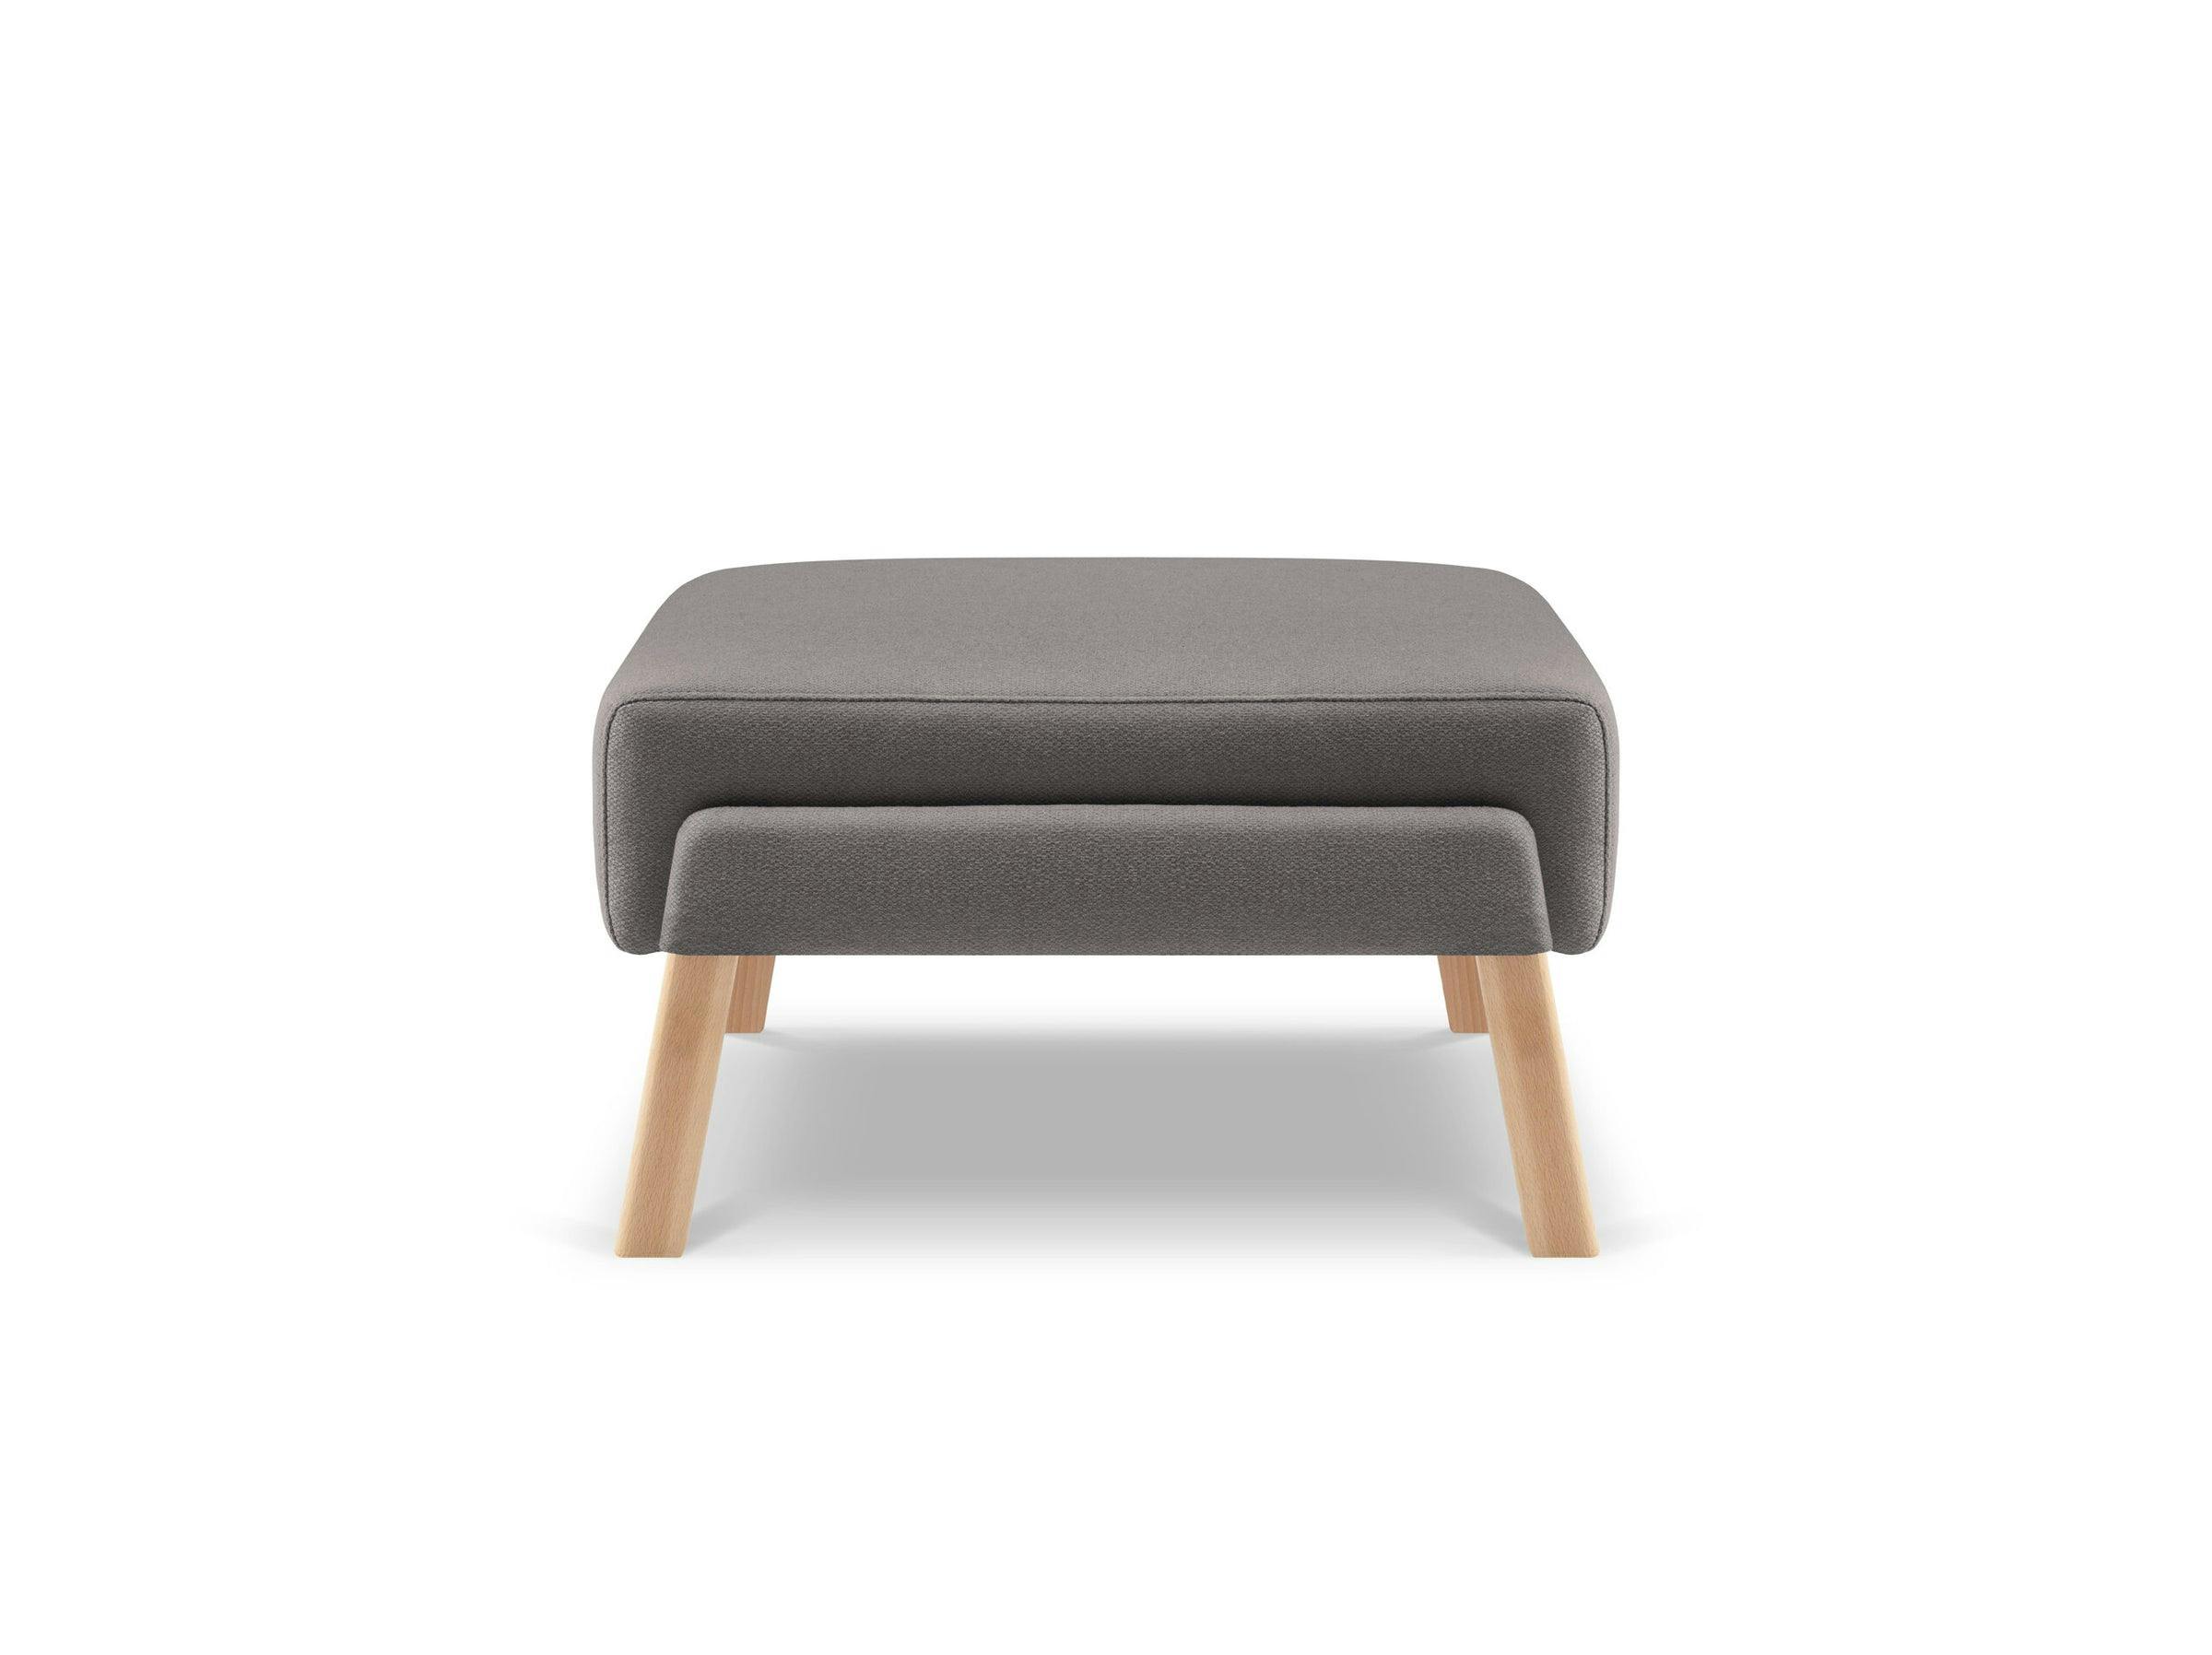 Salto sofas structured fabric grey